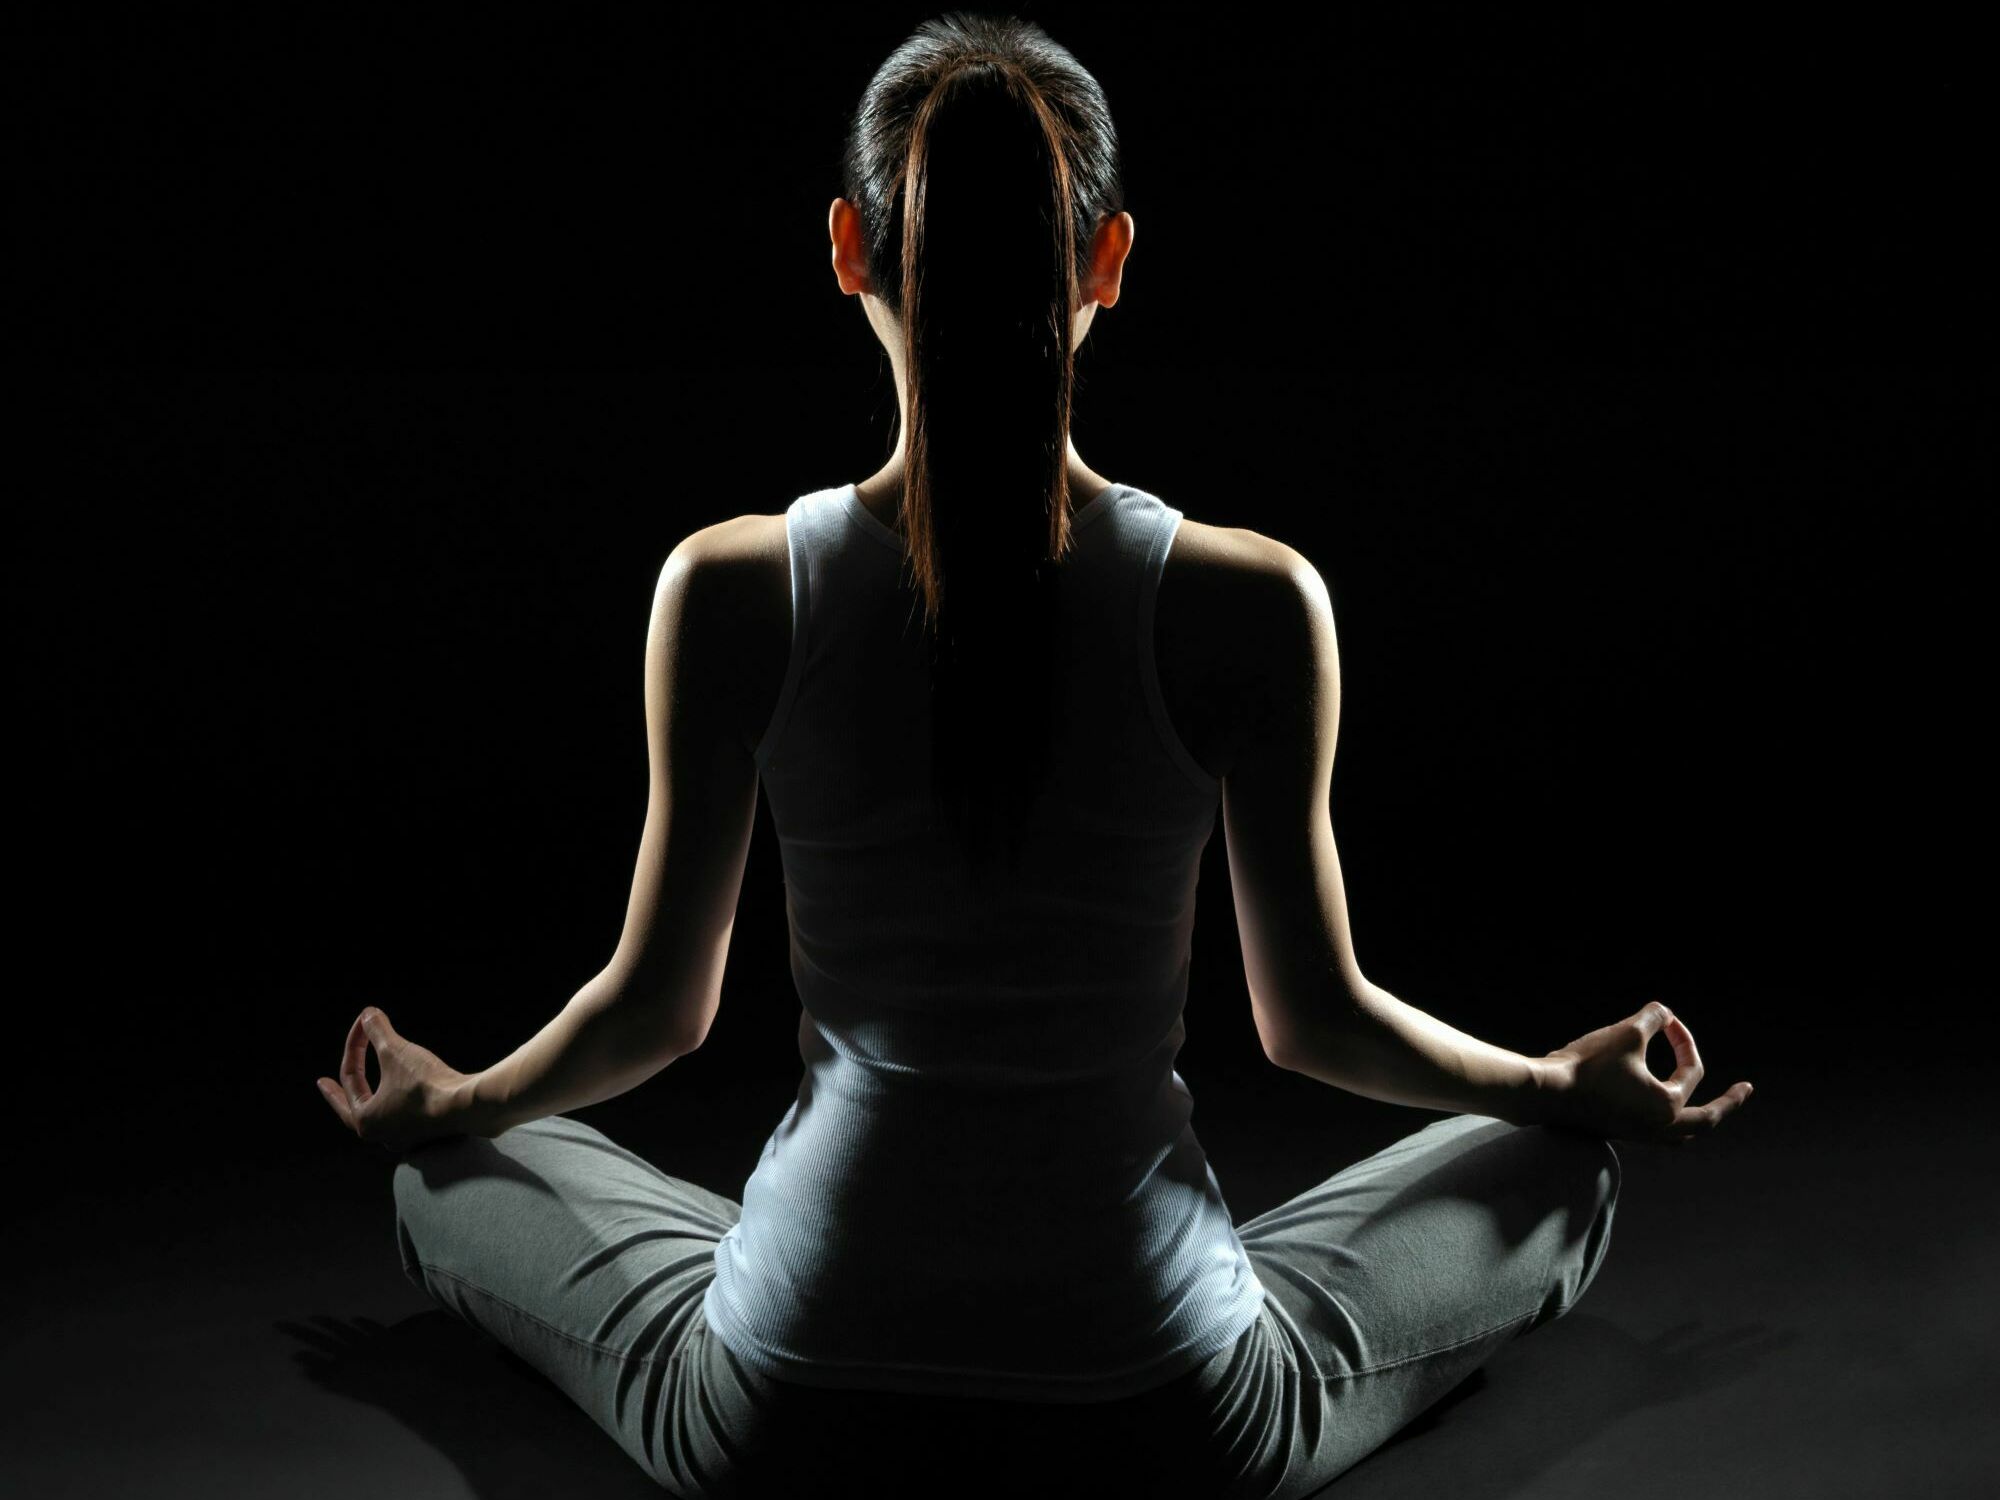 A new podcast examines the perils of intense meditation